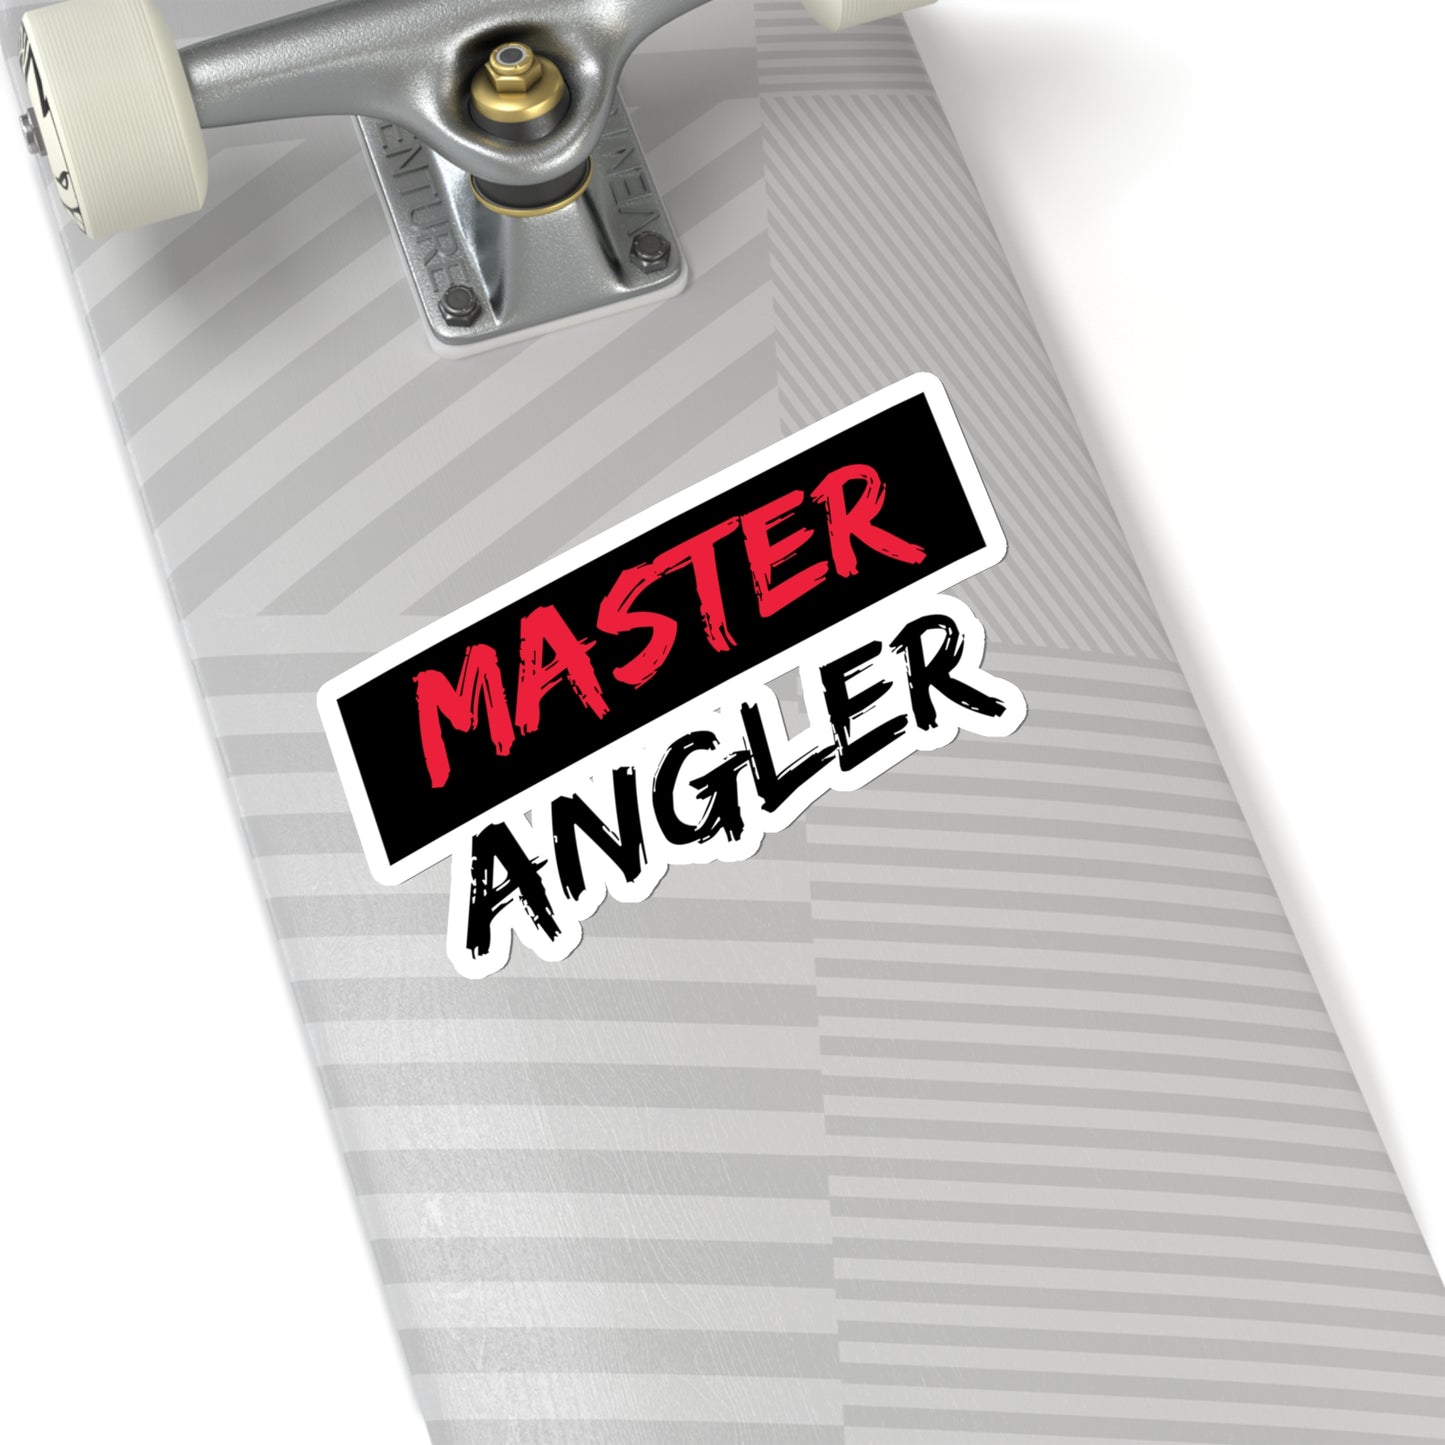 Black Stripe Master Angler Sticker - Square Red